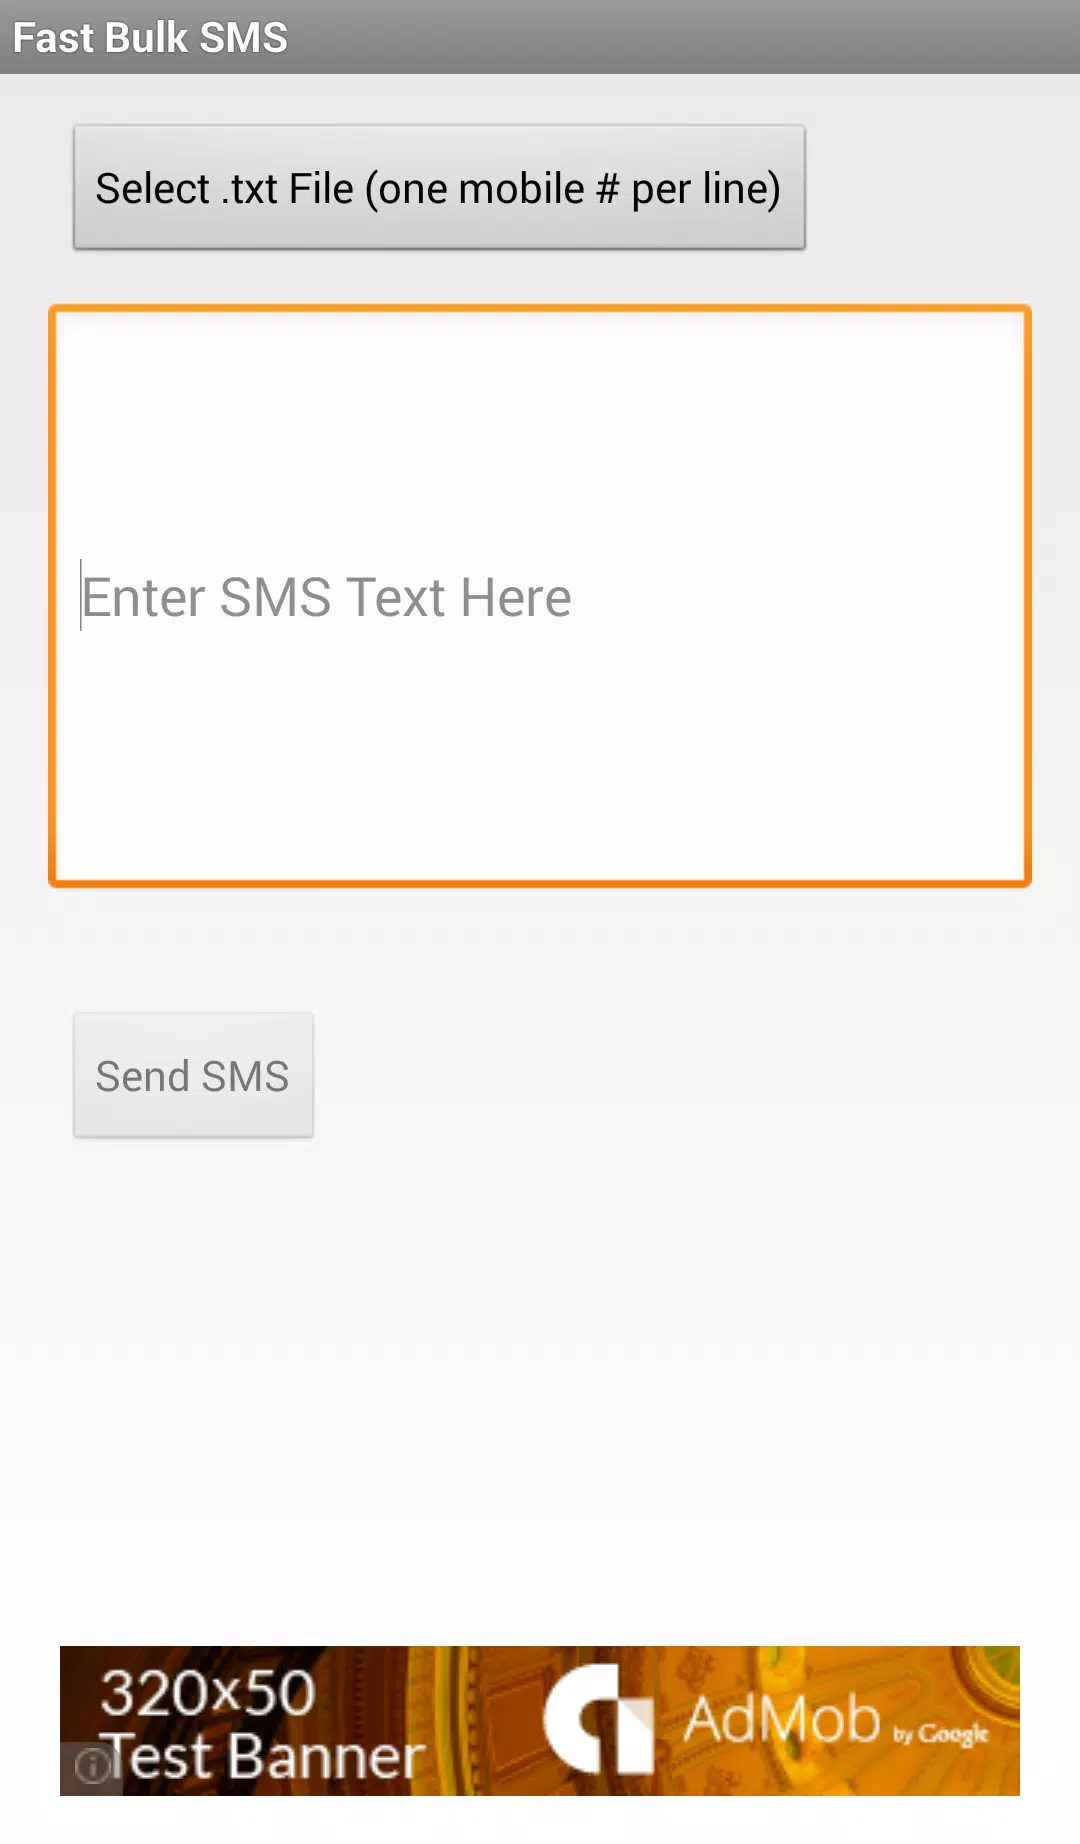 Fast Bulk SMS Pro APK